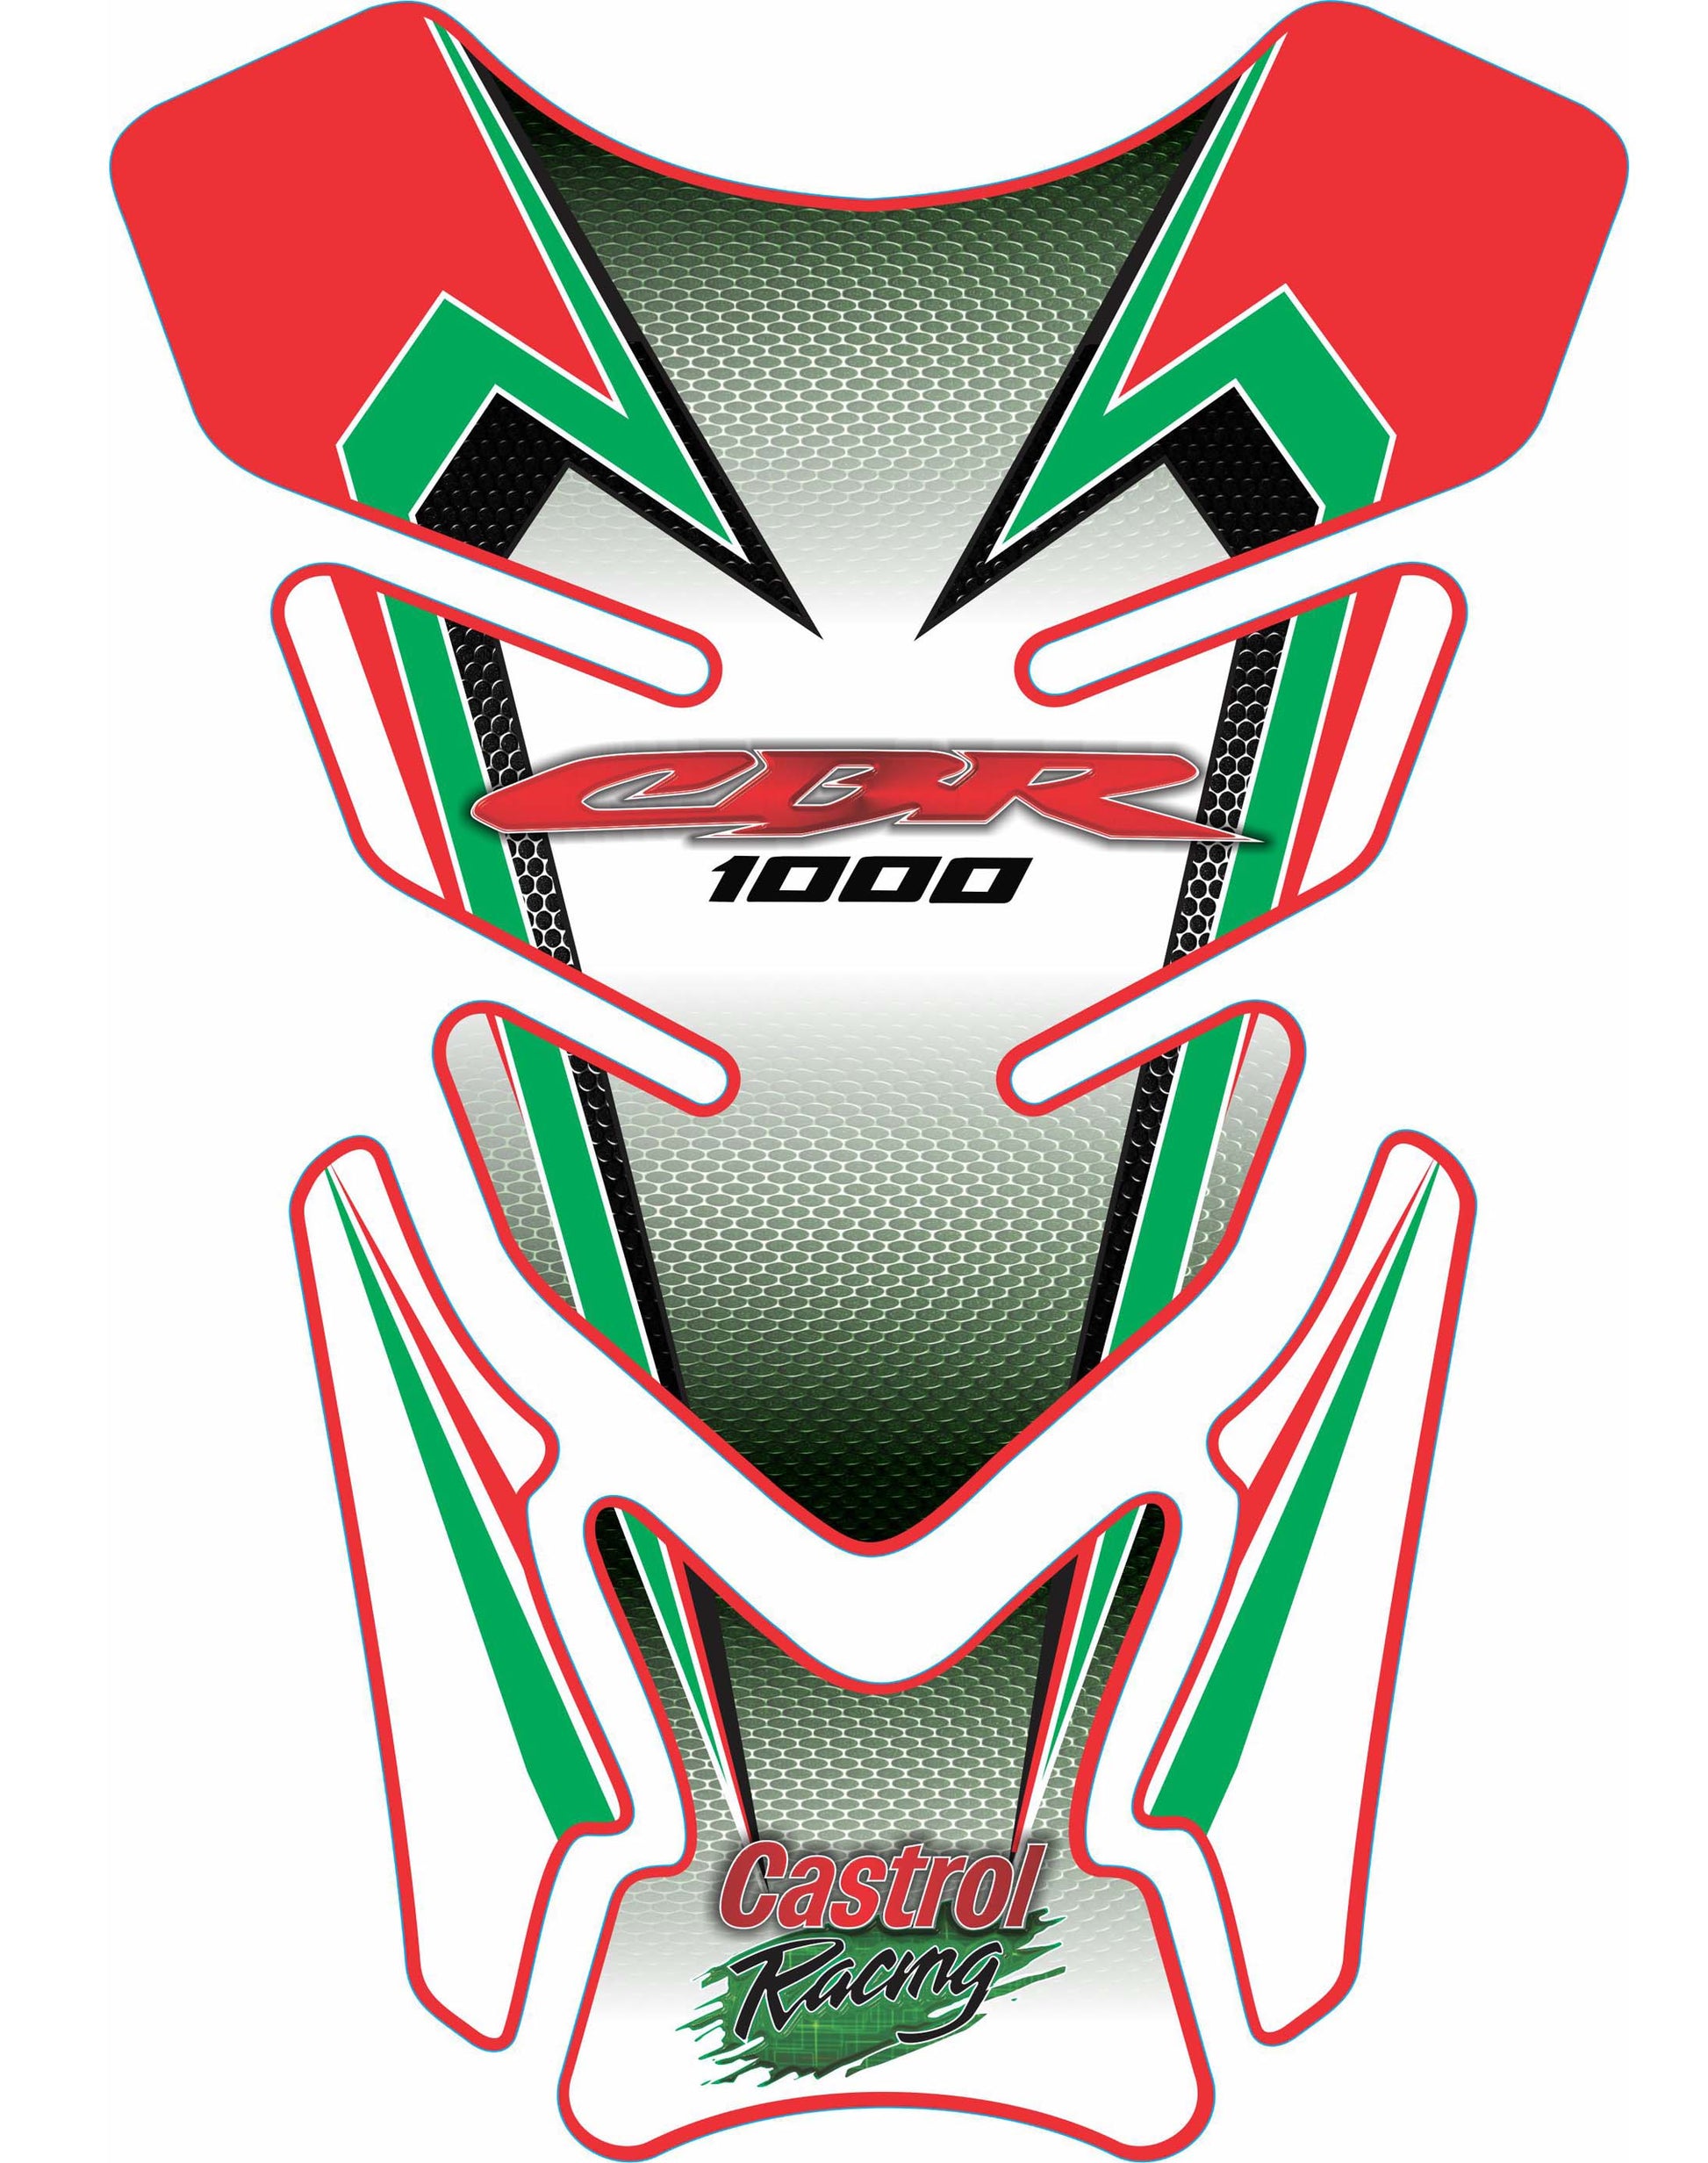 Honda Castrol Racing 1000 Tank Pad